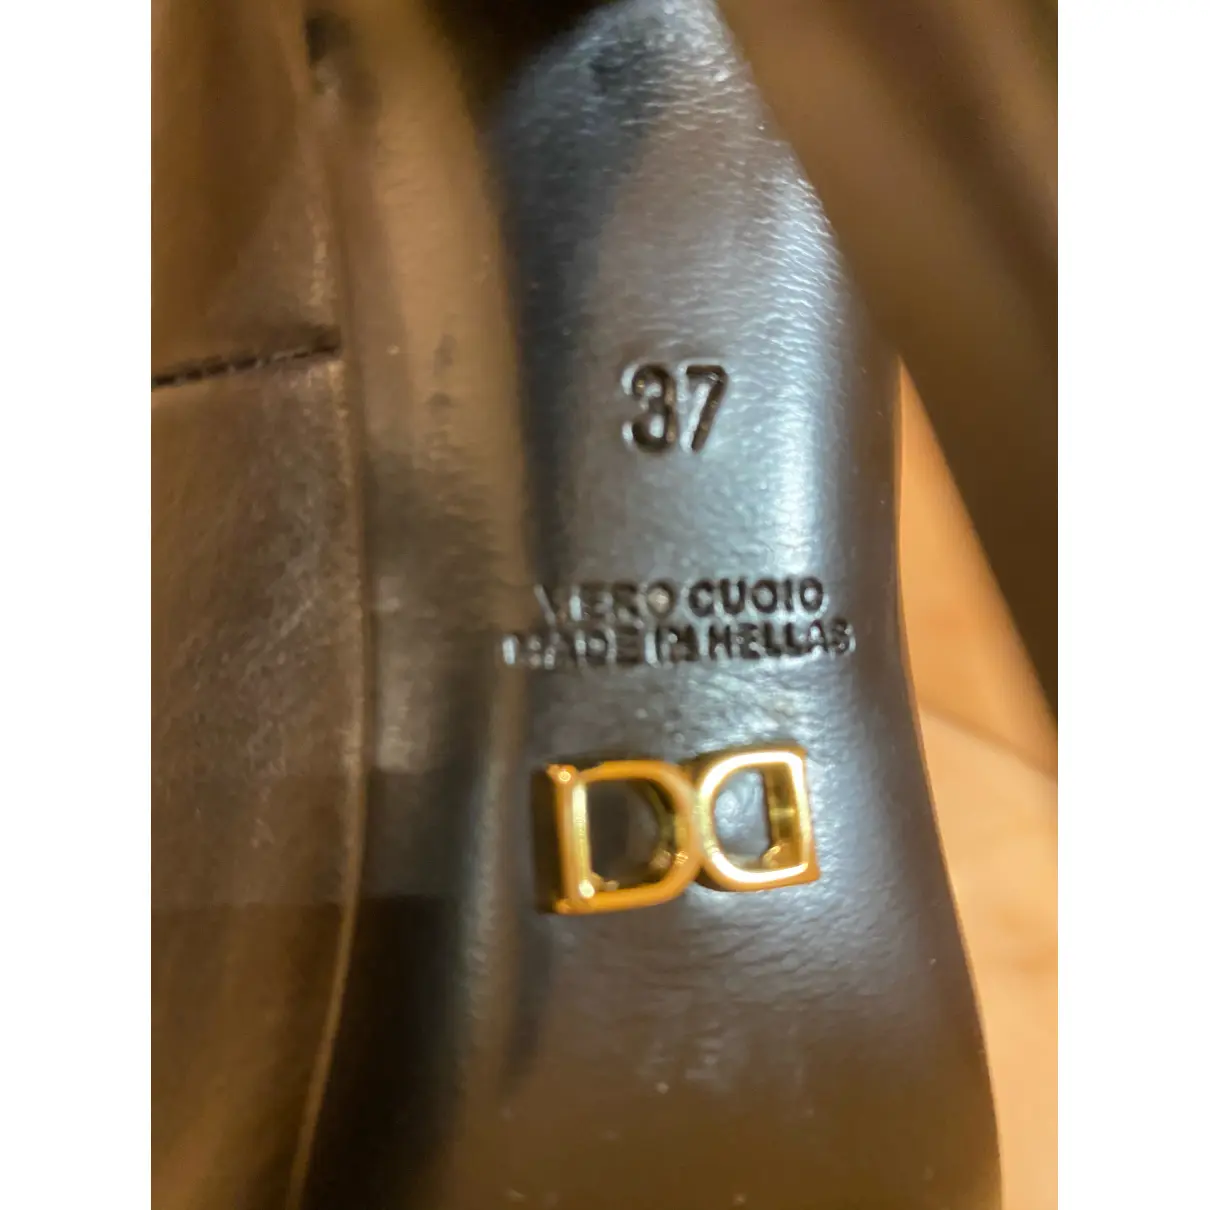 Leather heels Dukas